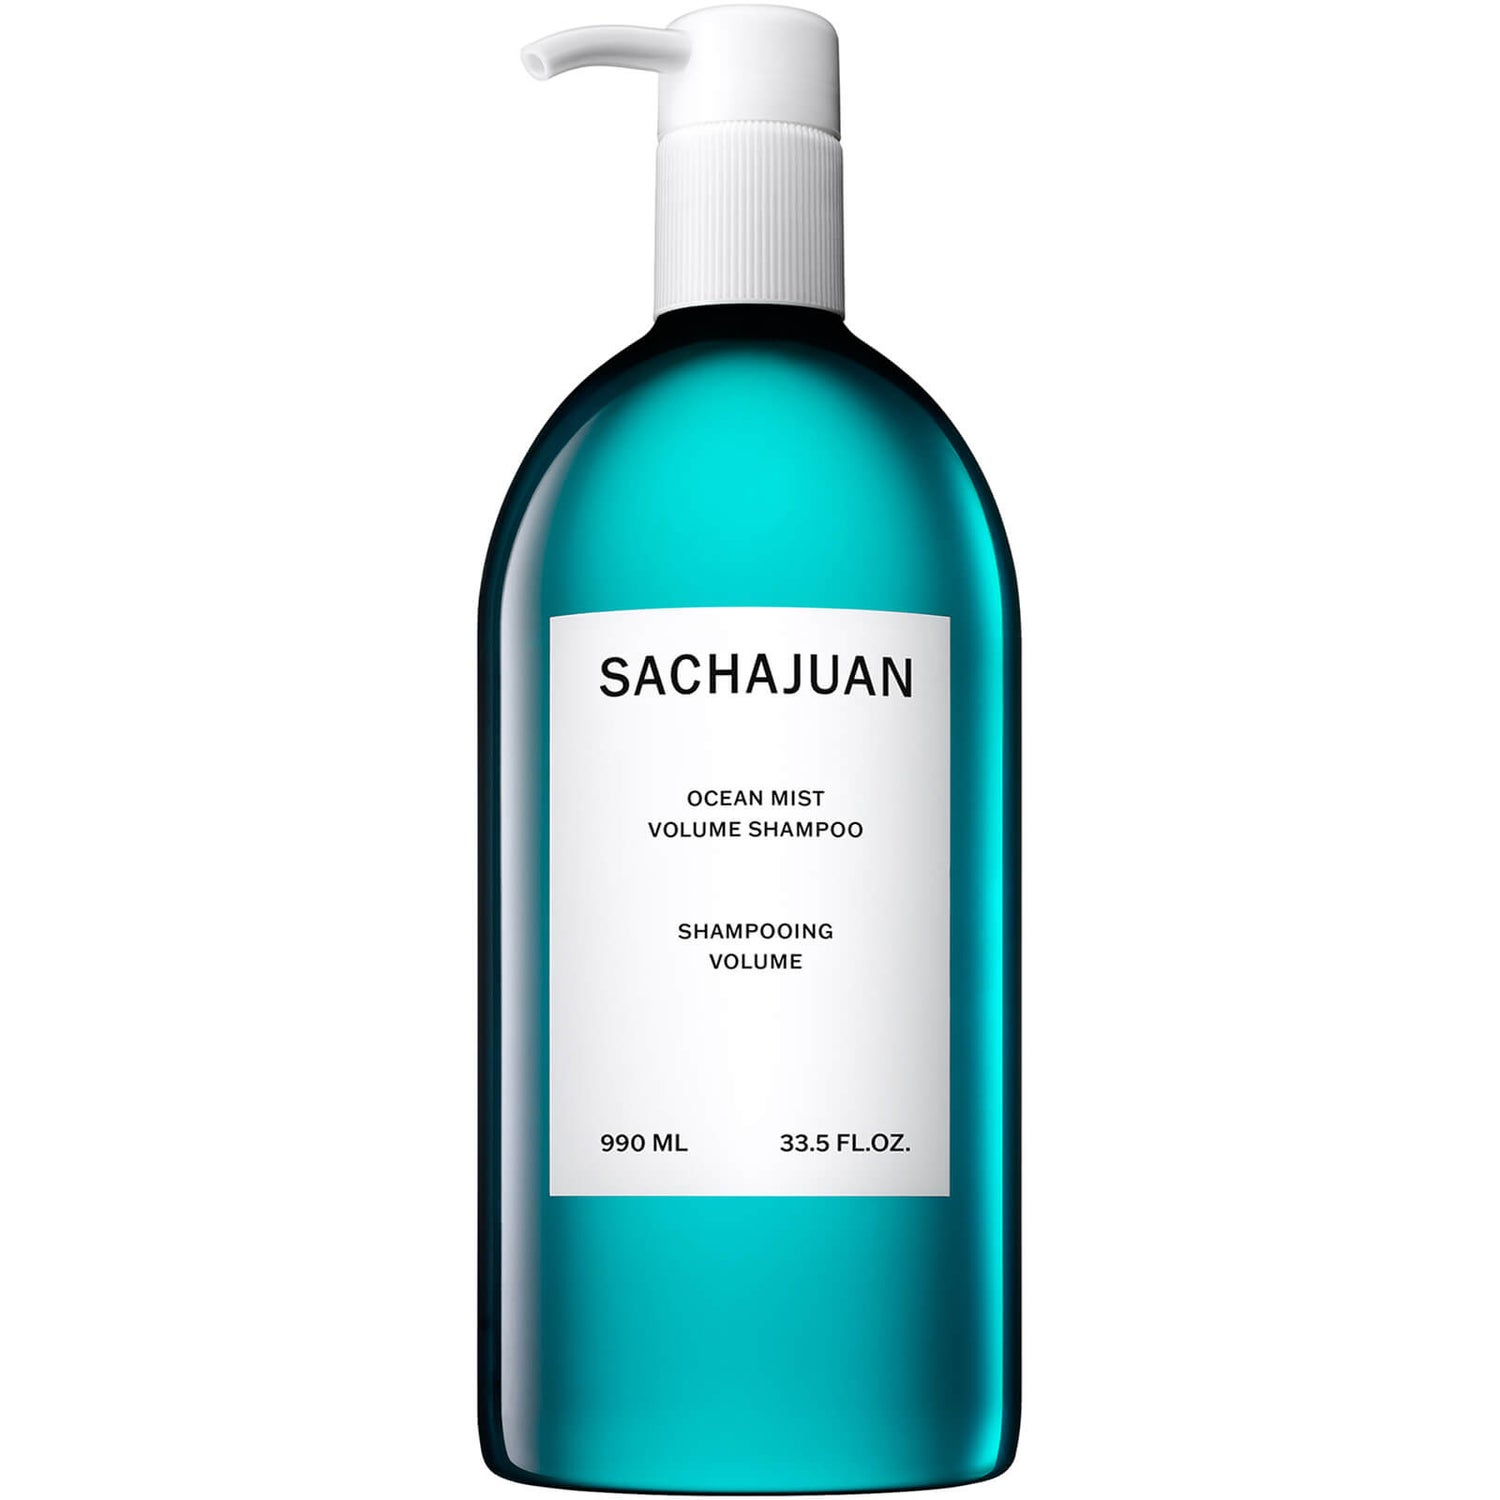 Sachajuan Ocean Mist Volume Shampoo 990ml